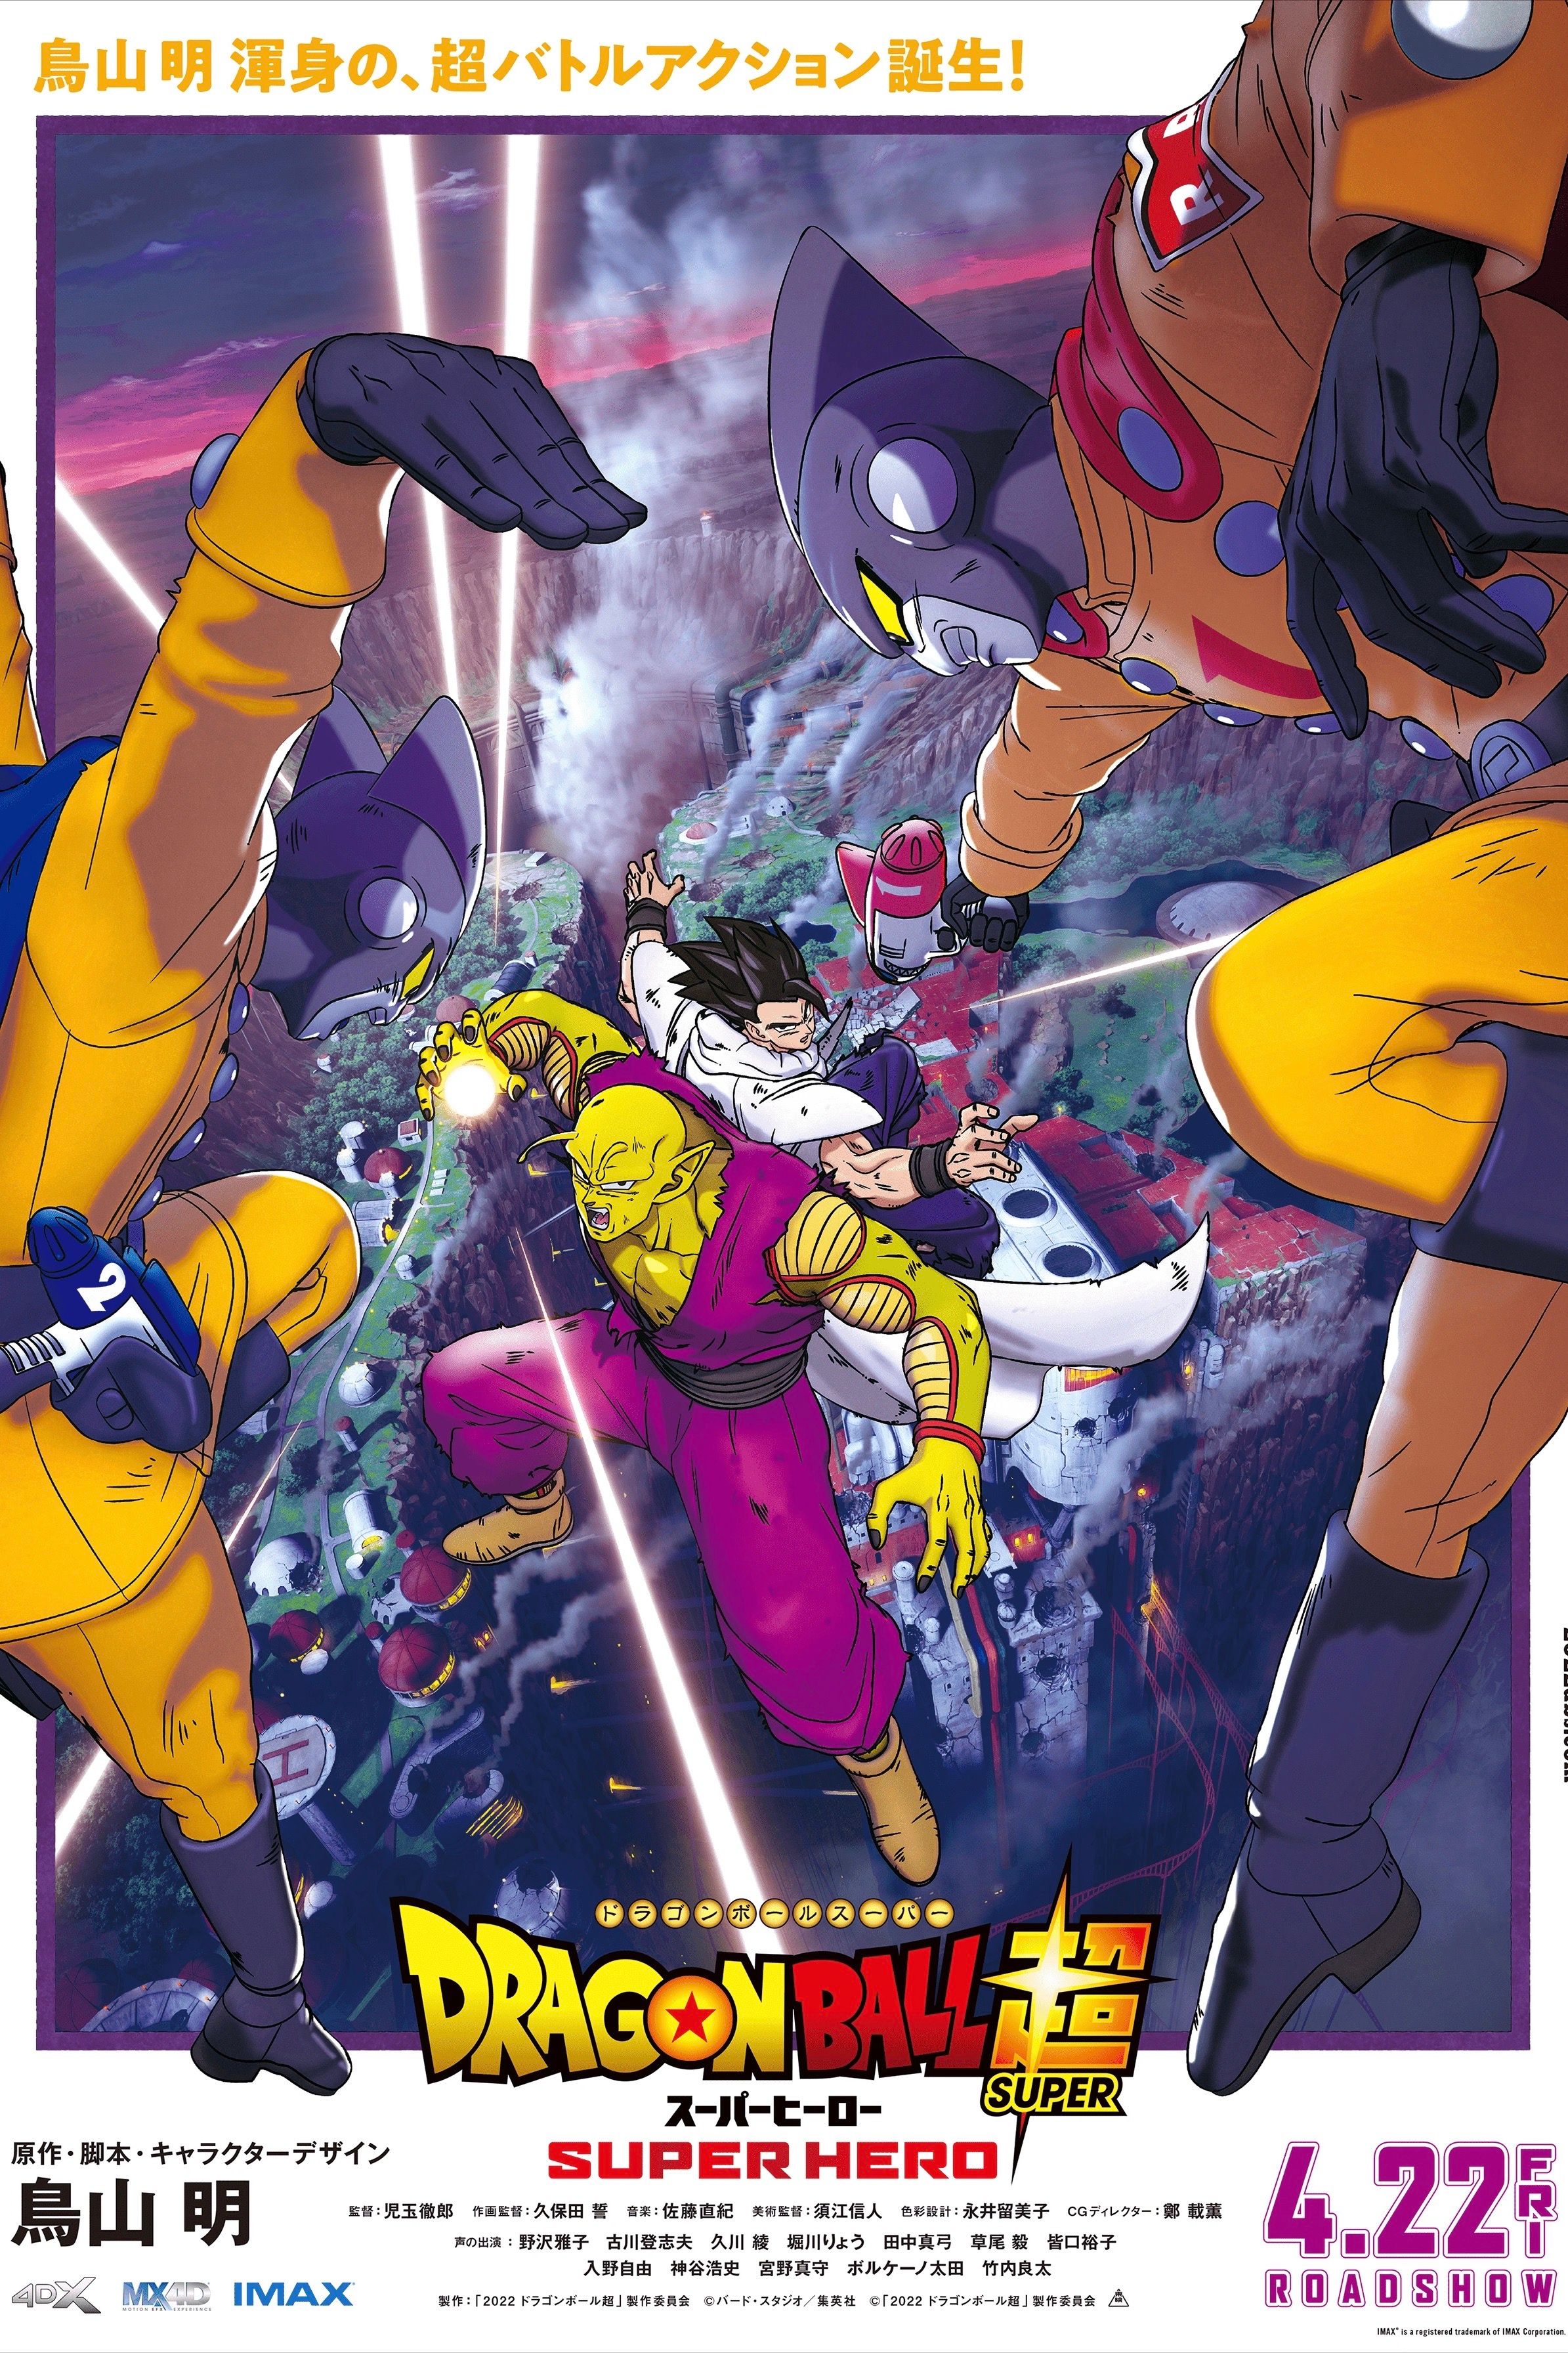 Dragon Ball Super Superhero Poster